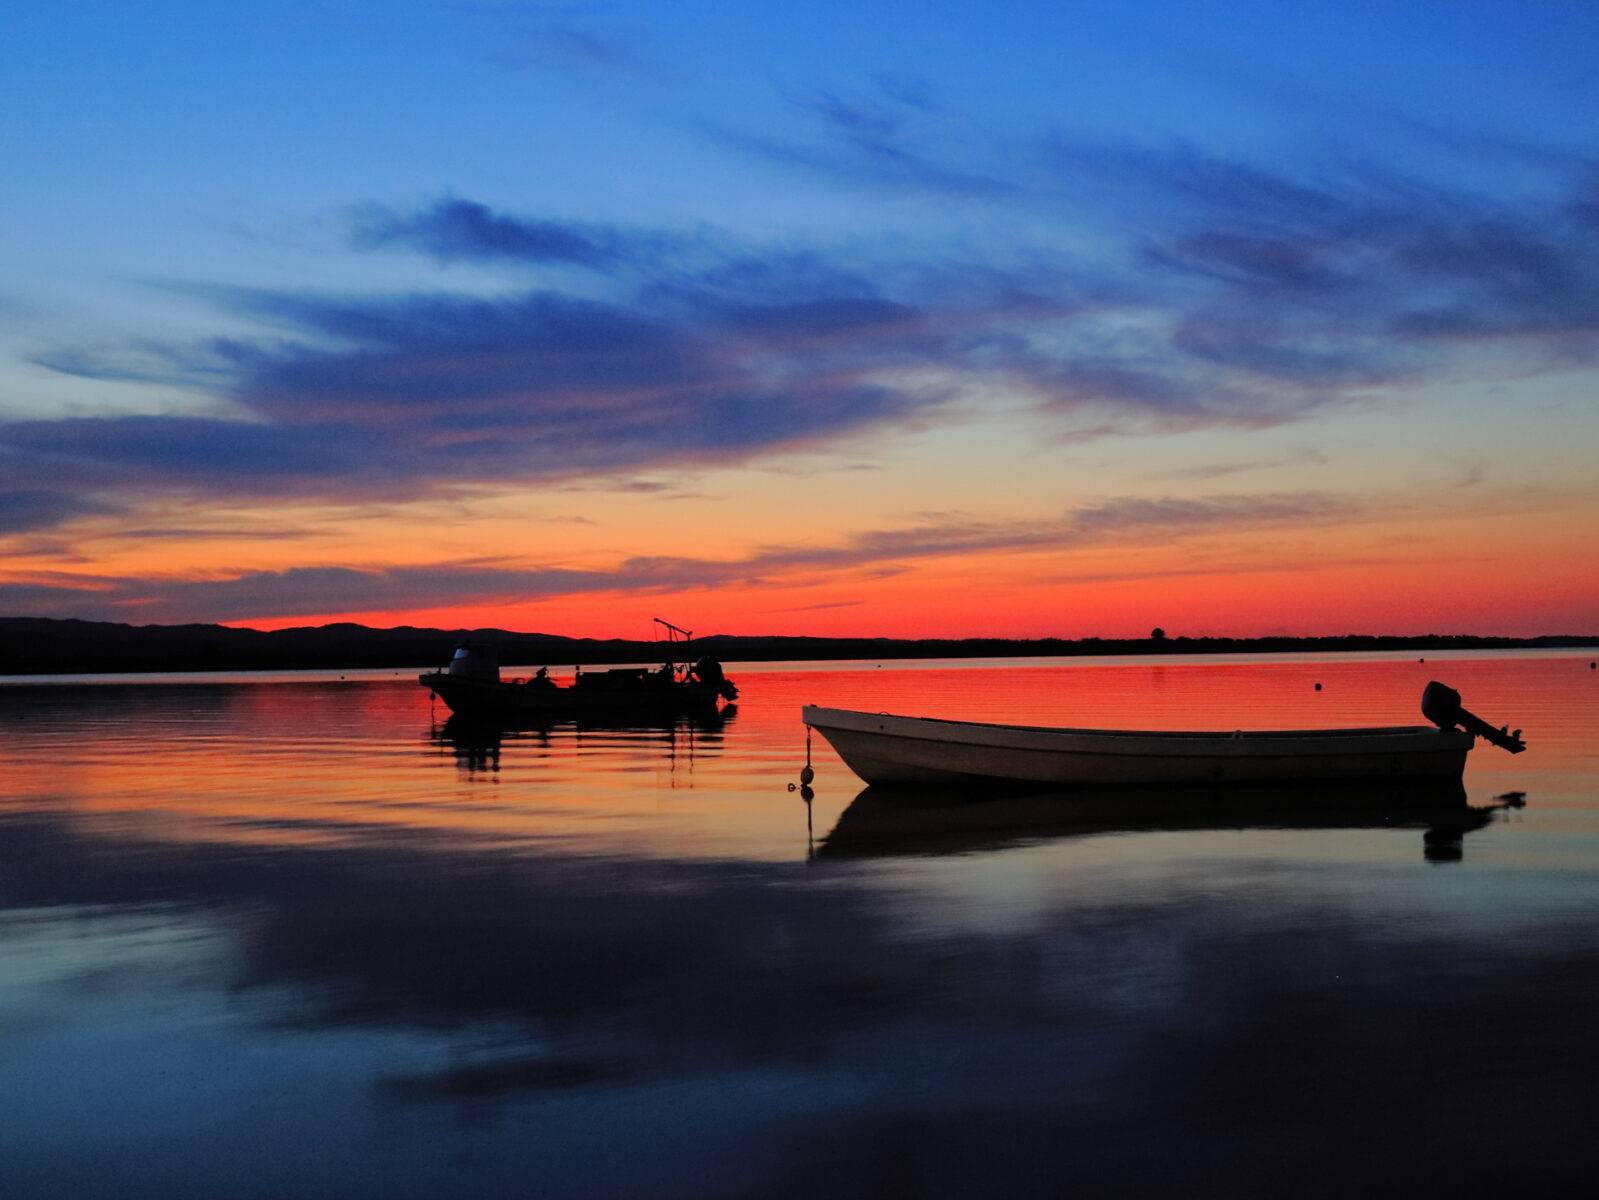 Emotive sunset by the lake